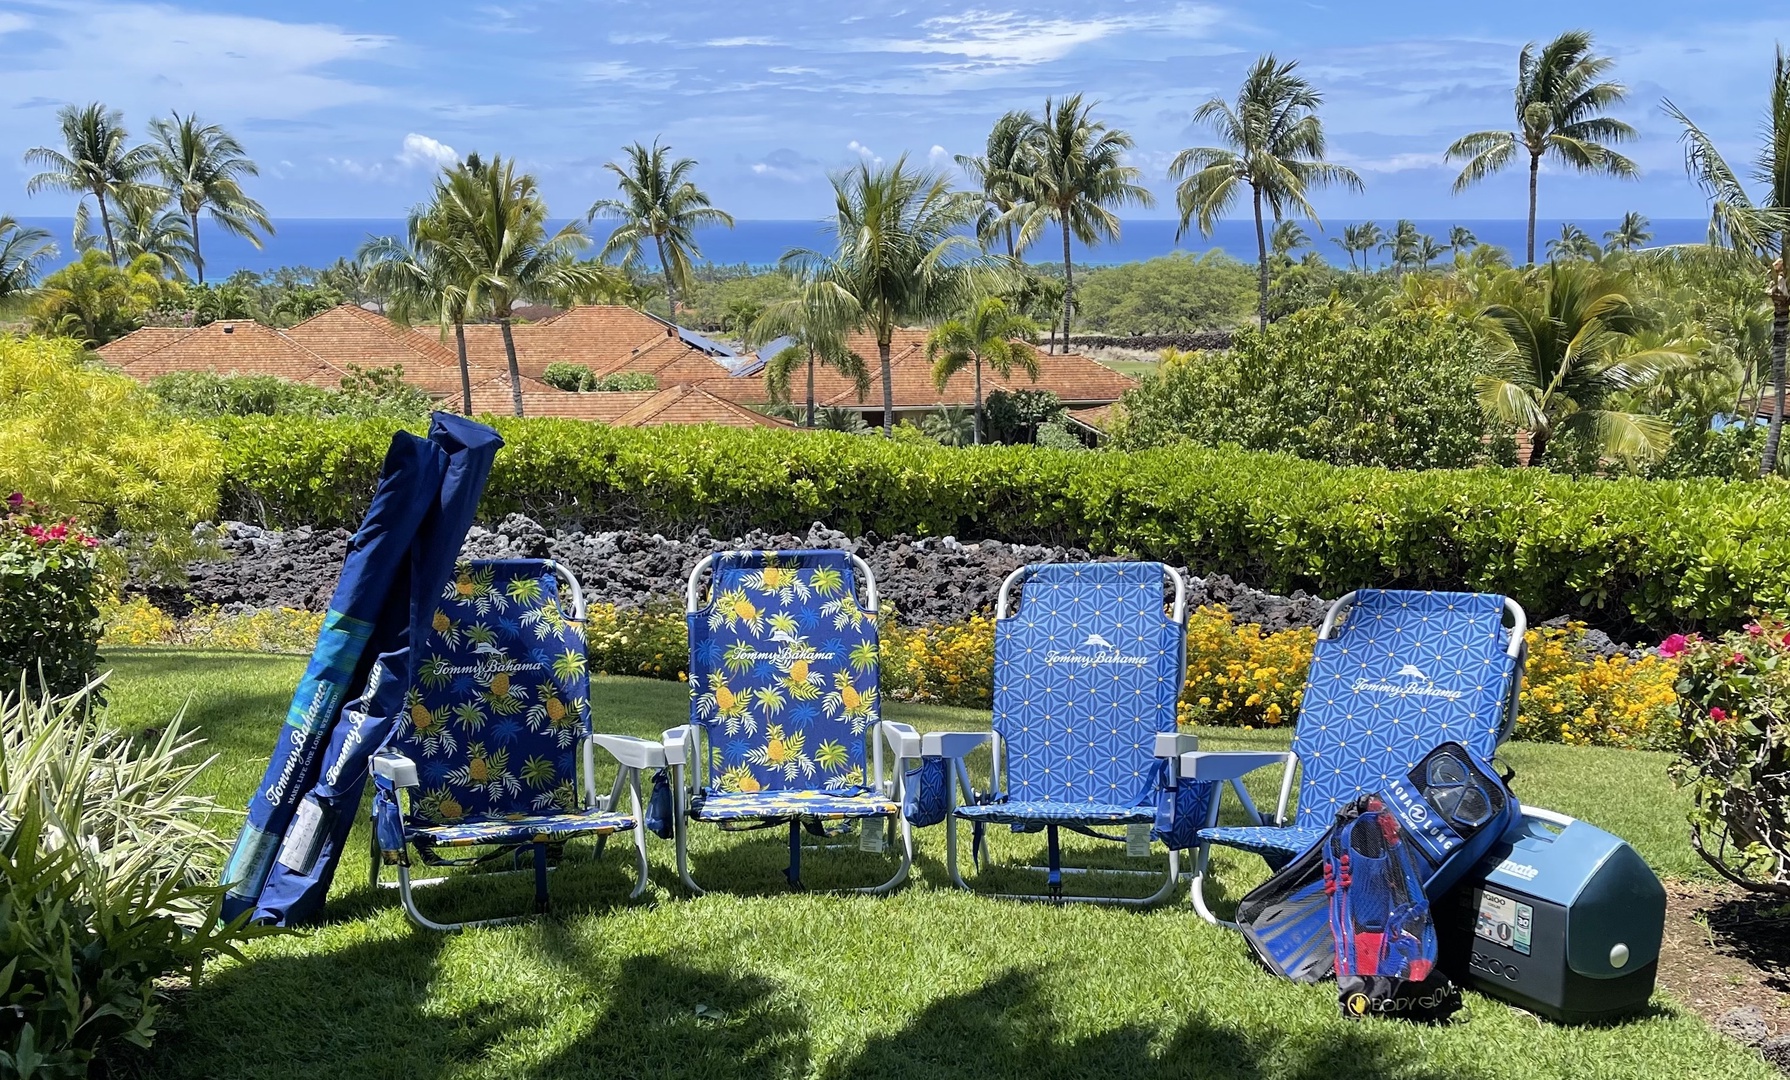 Kailua Kona Vacation Rentals, 3BD Hainoa Villa (2907C) at Four Seasons Resort at Hualalai - Beach amenities - subject to change.